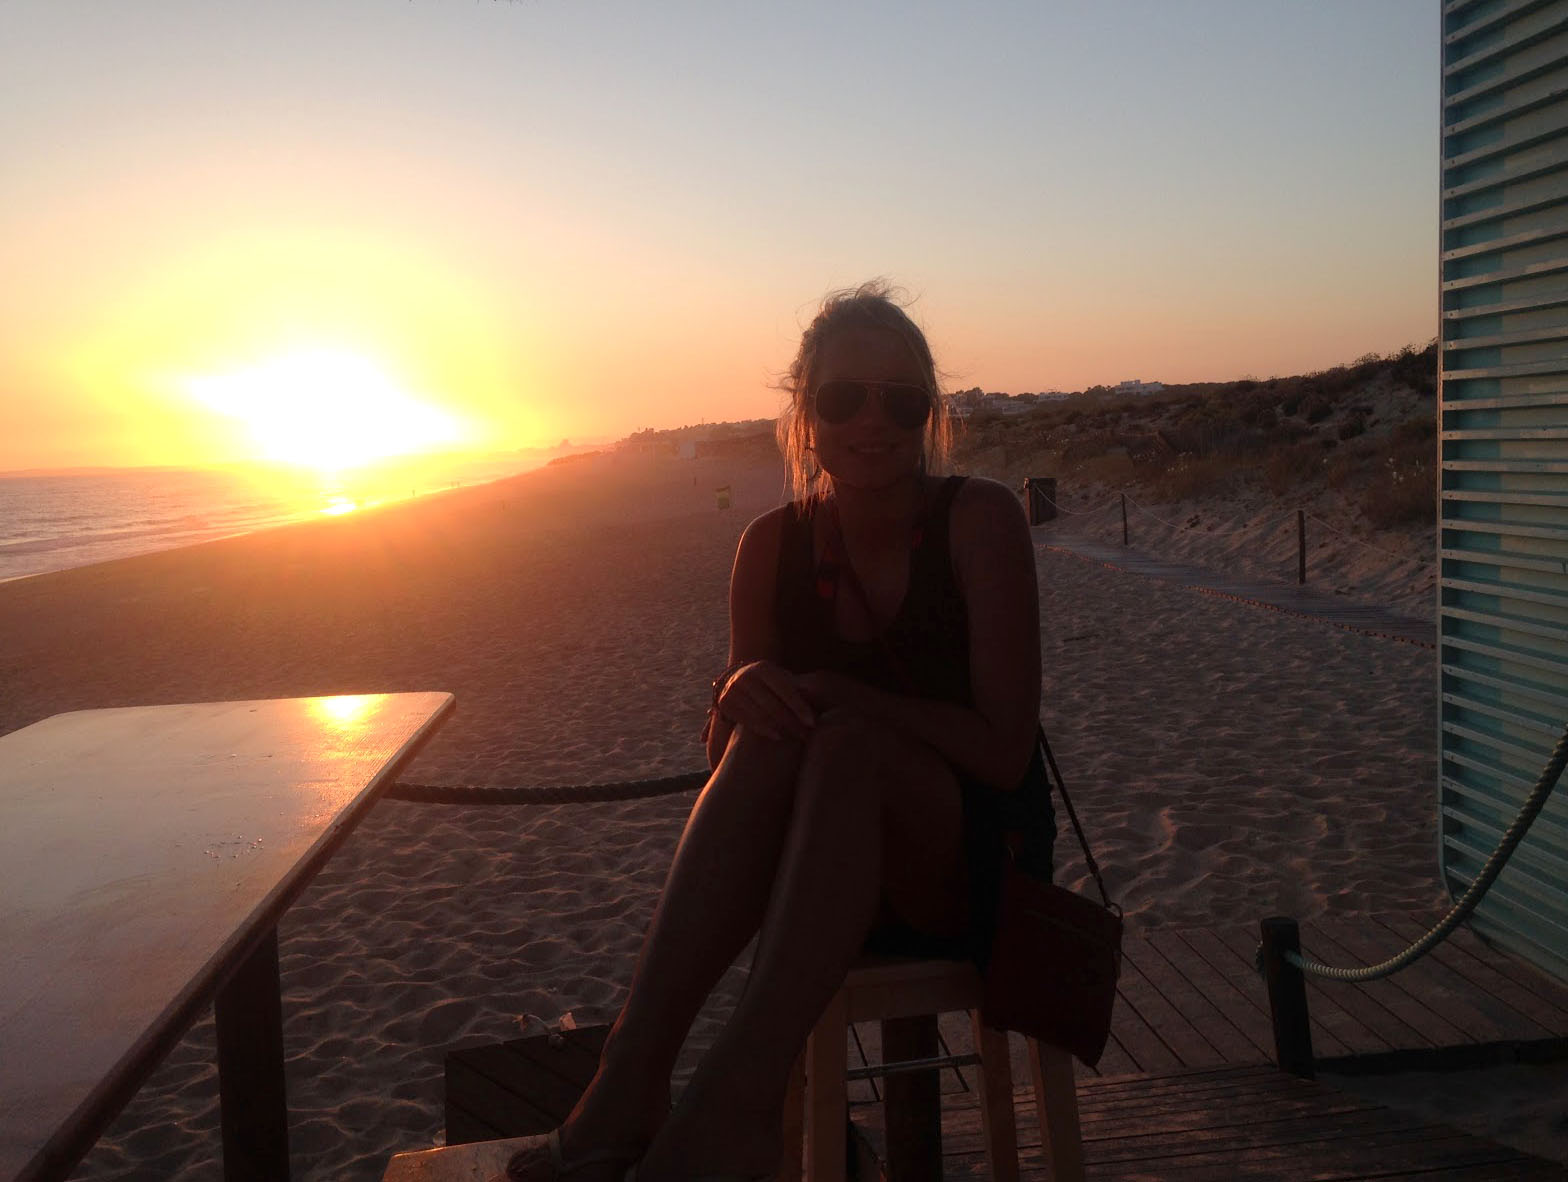 3moco Beach Bar - Praia d'ancao, Algarve, Portugal by Emma Eats & Explores